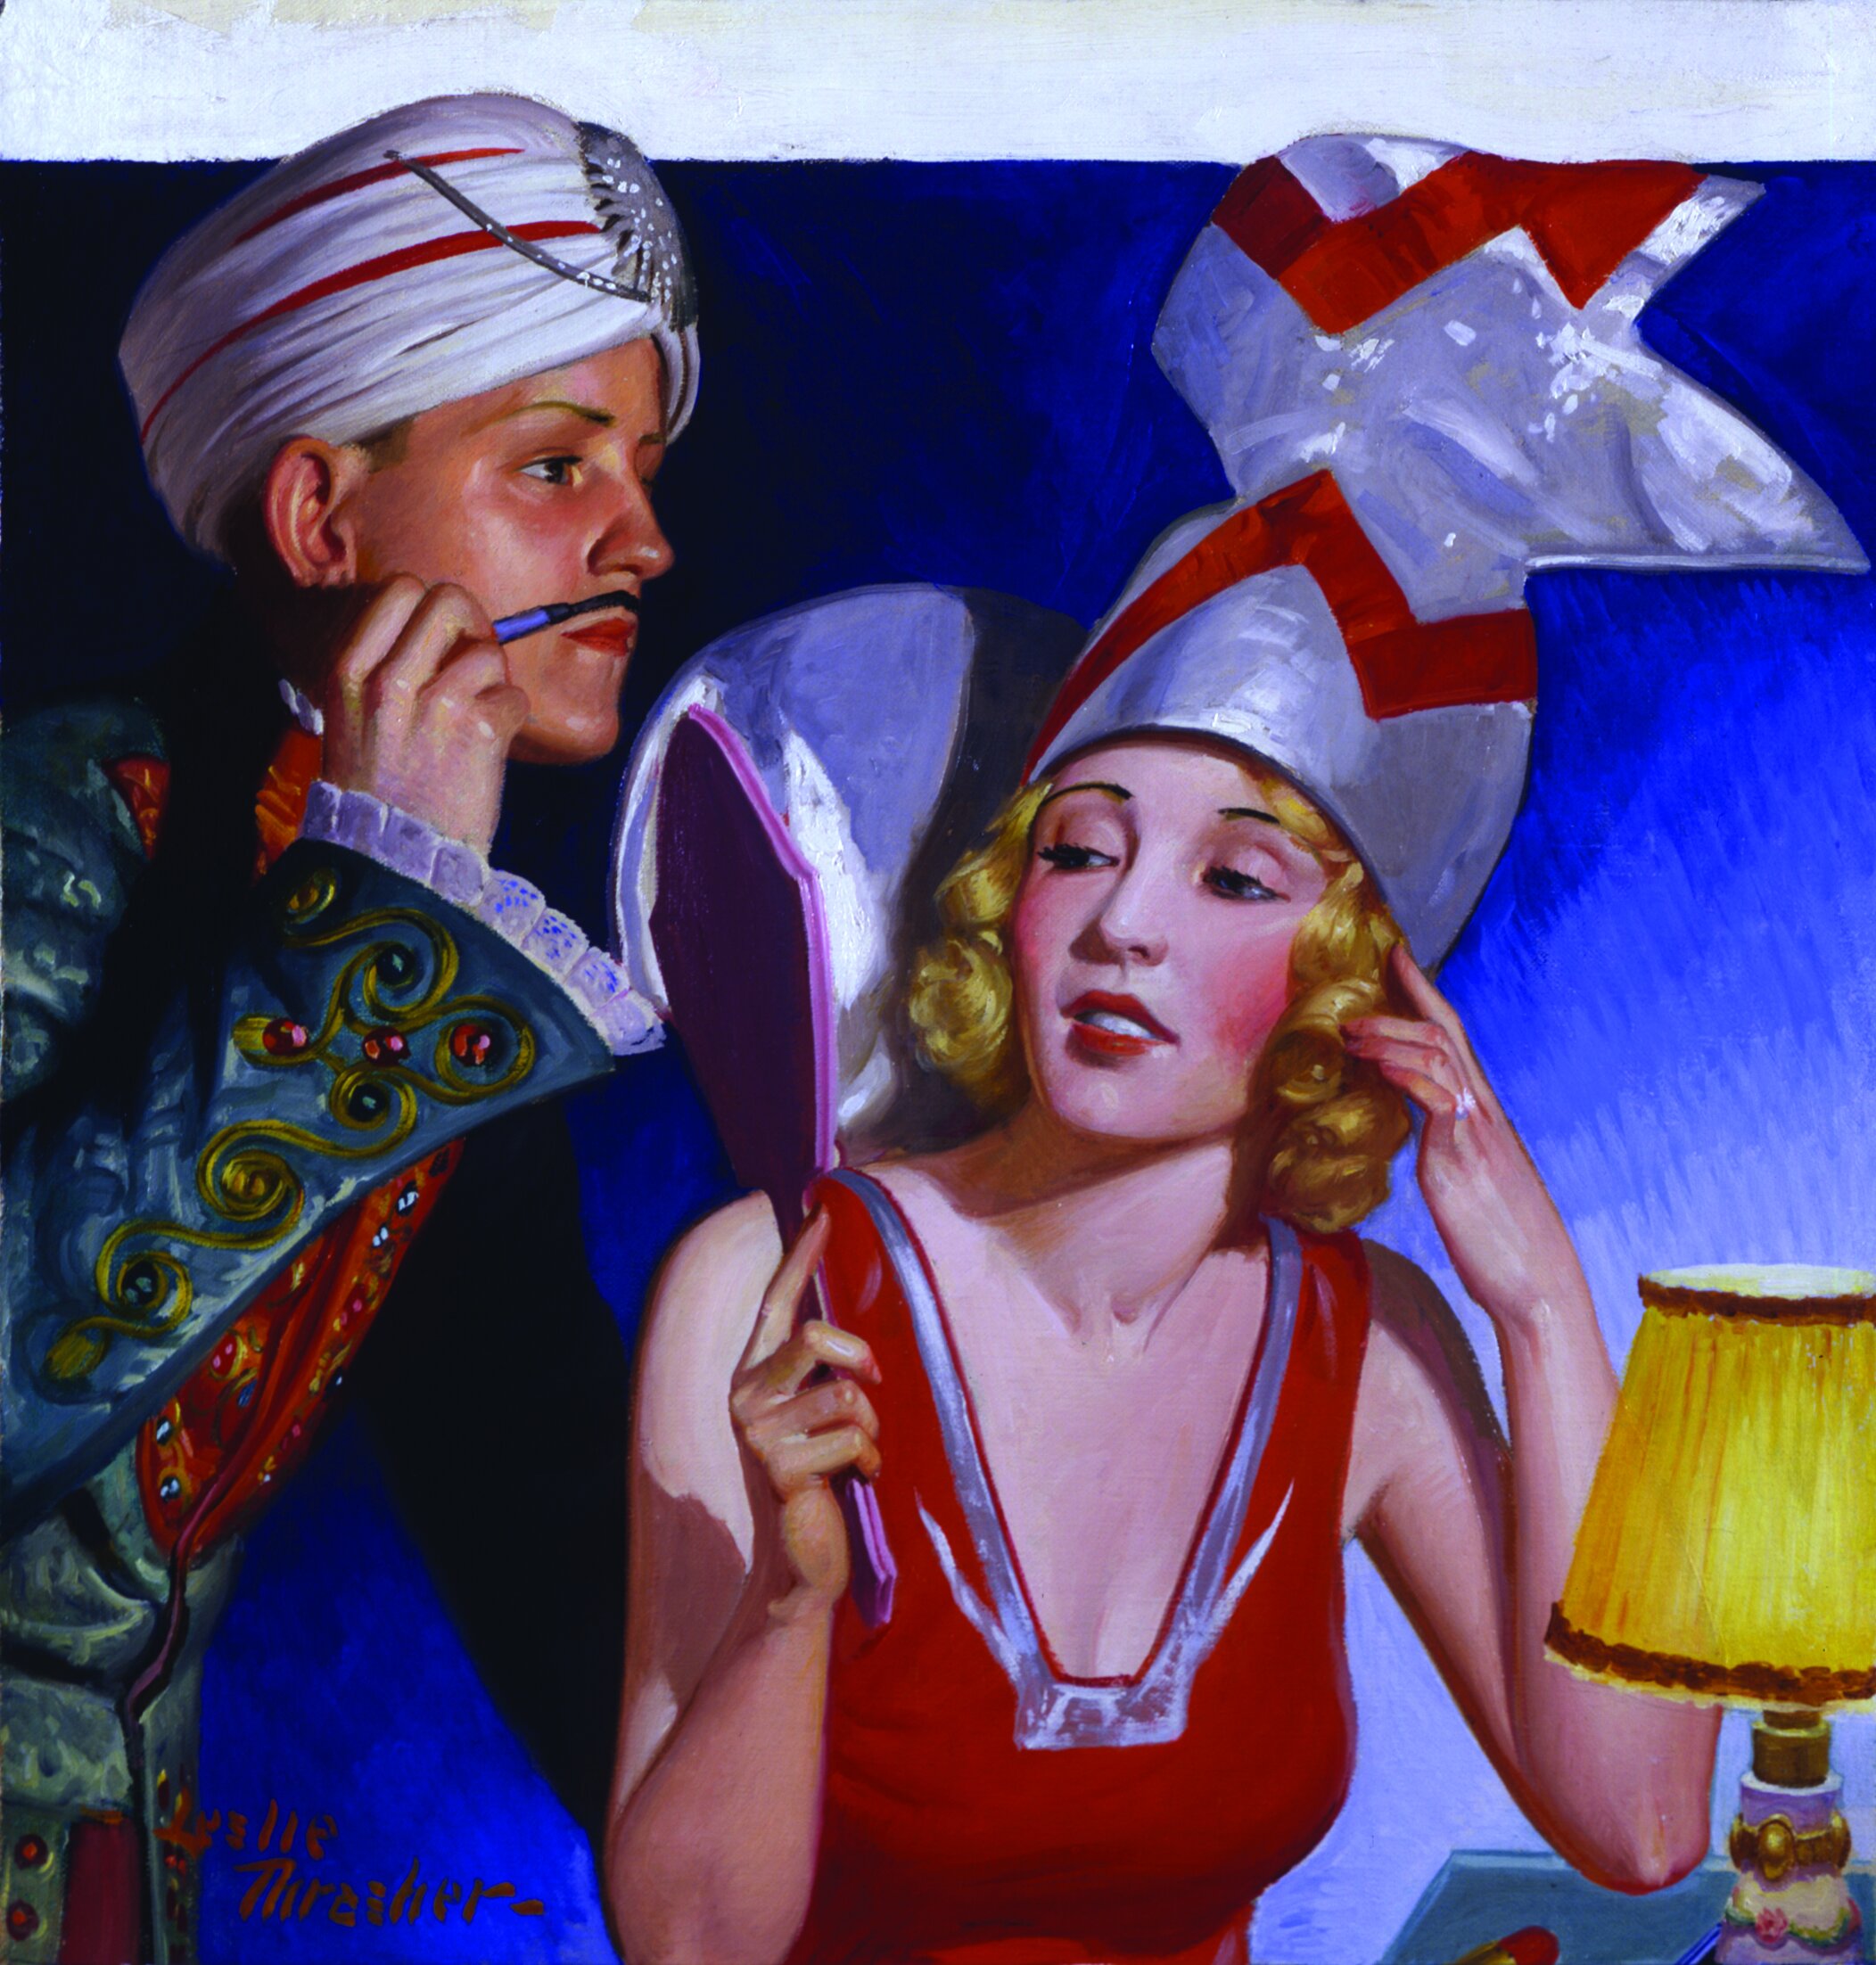   Leslie Thrasher (1889-1936)   Costume Ball  1932, oil on canvas 18” x 18”, signed lower left  Liberty Magazine,  February 20, 1932 cover 